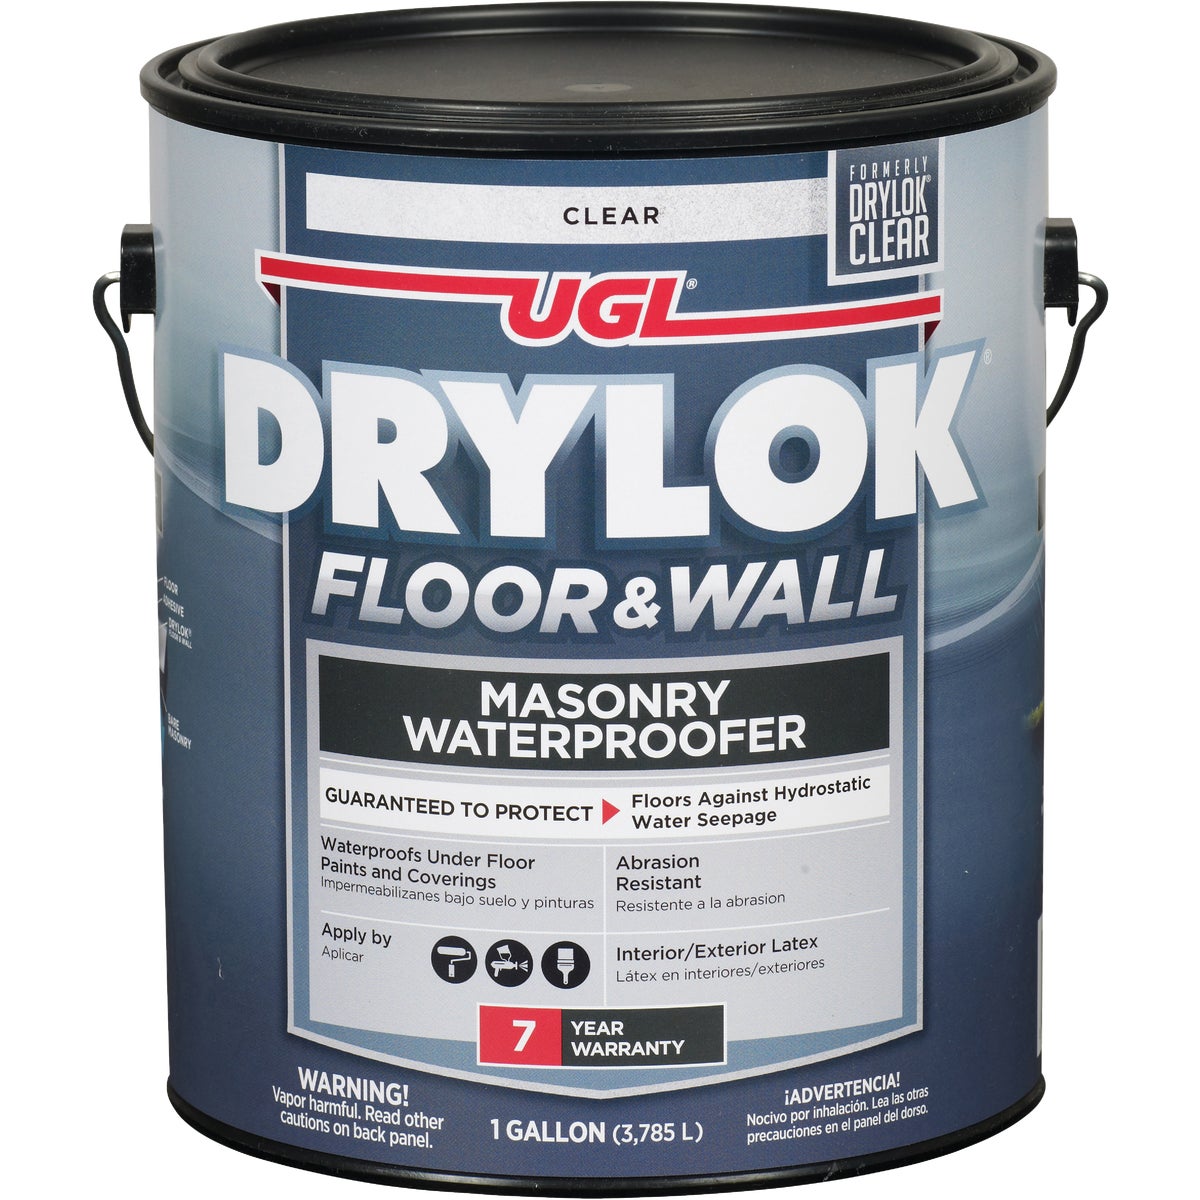 Drylok Clear Floor & Wall Masonry Waterproofer, 1 Gal.